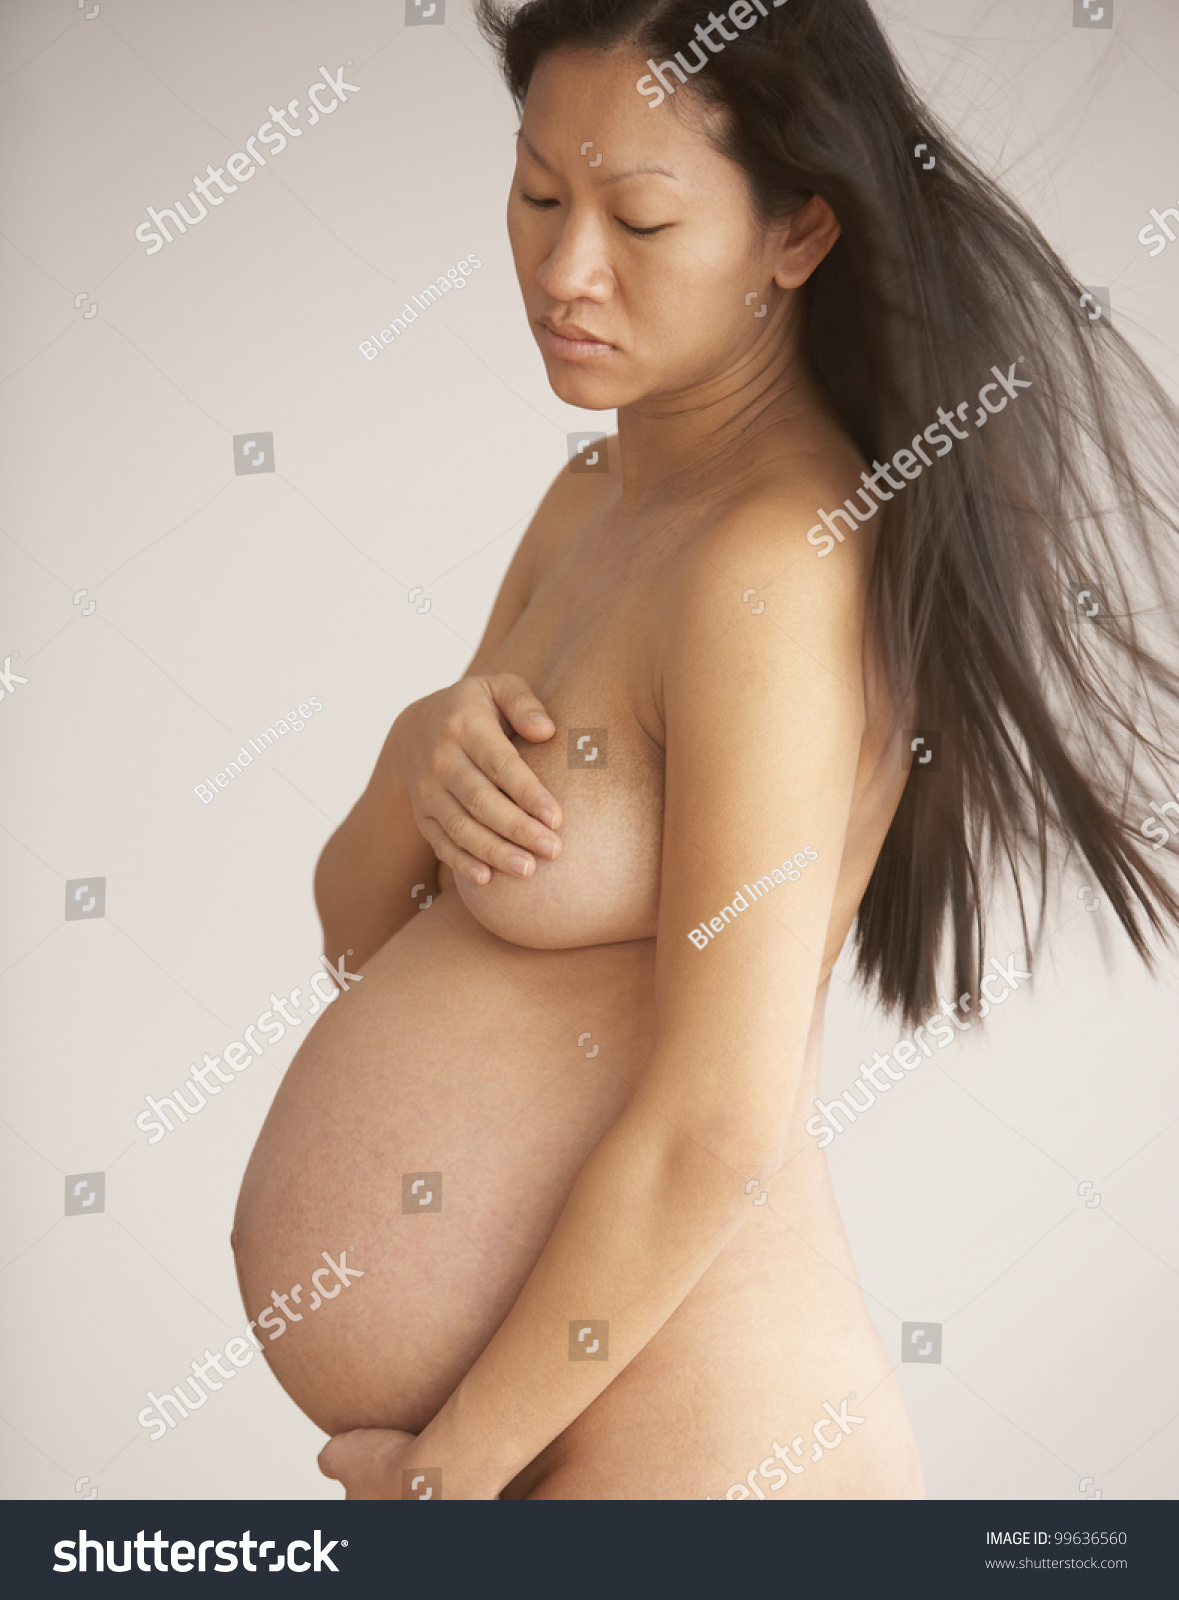 Hot Materbating Women Pics 94